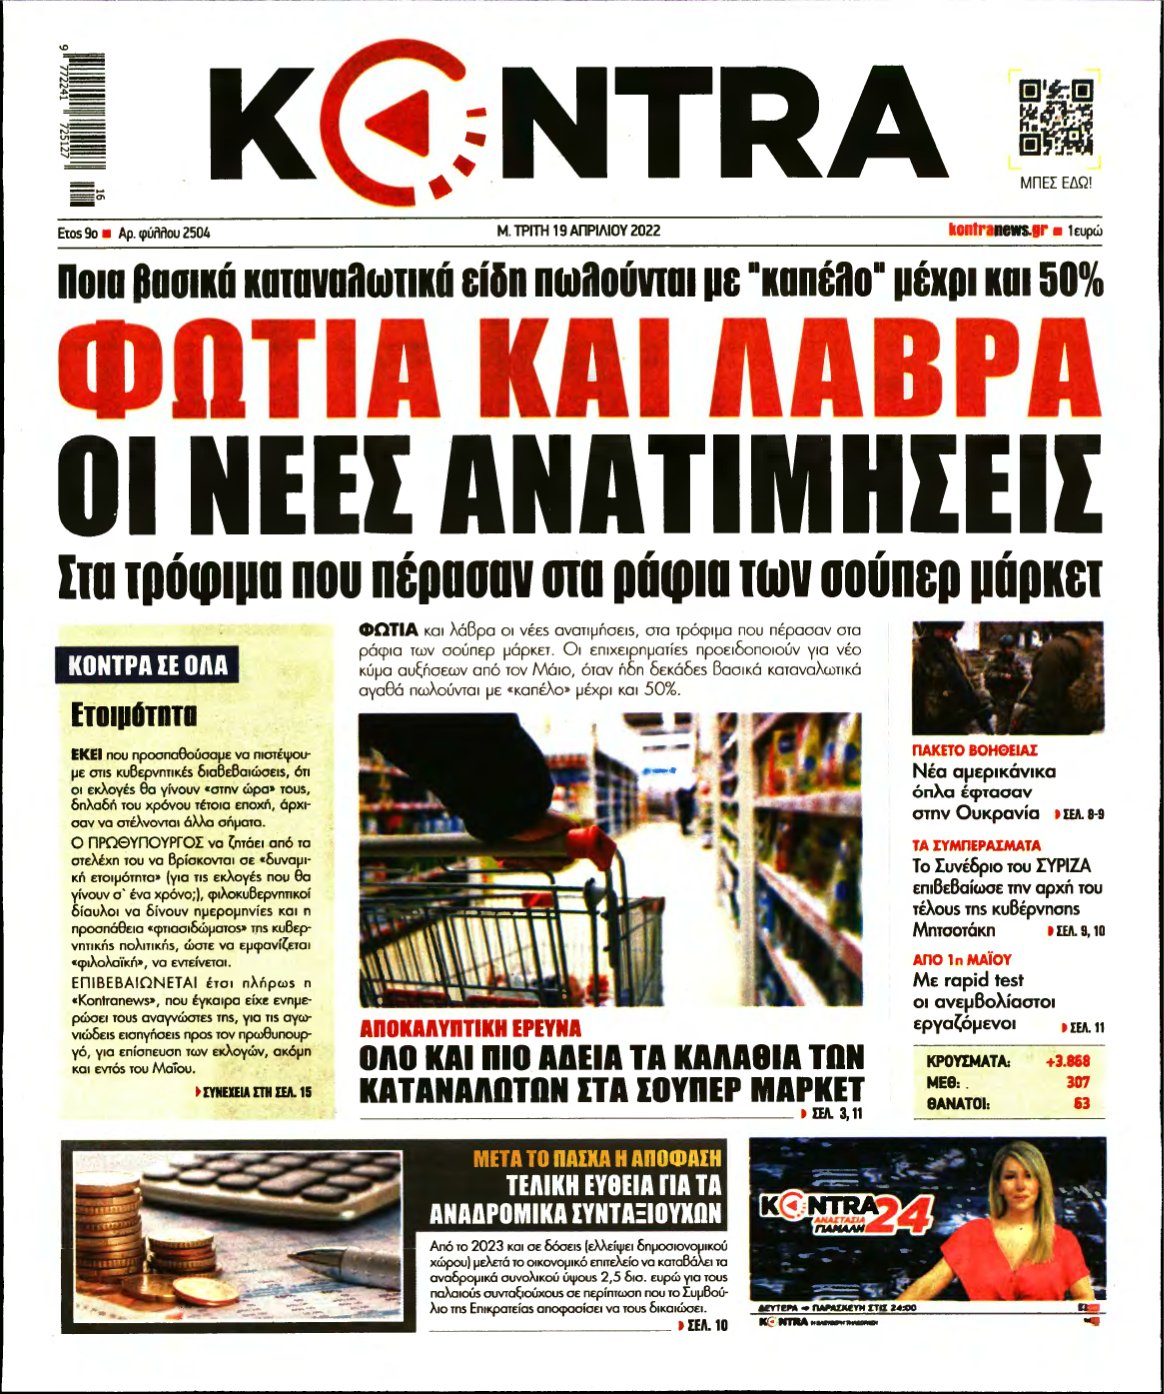 KONTRA NEWS – 19/04/2022